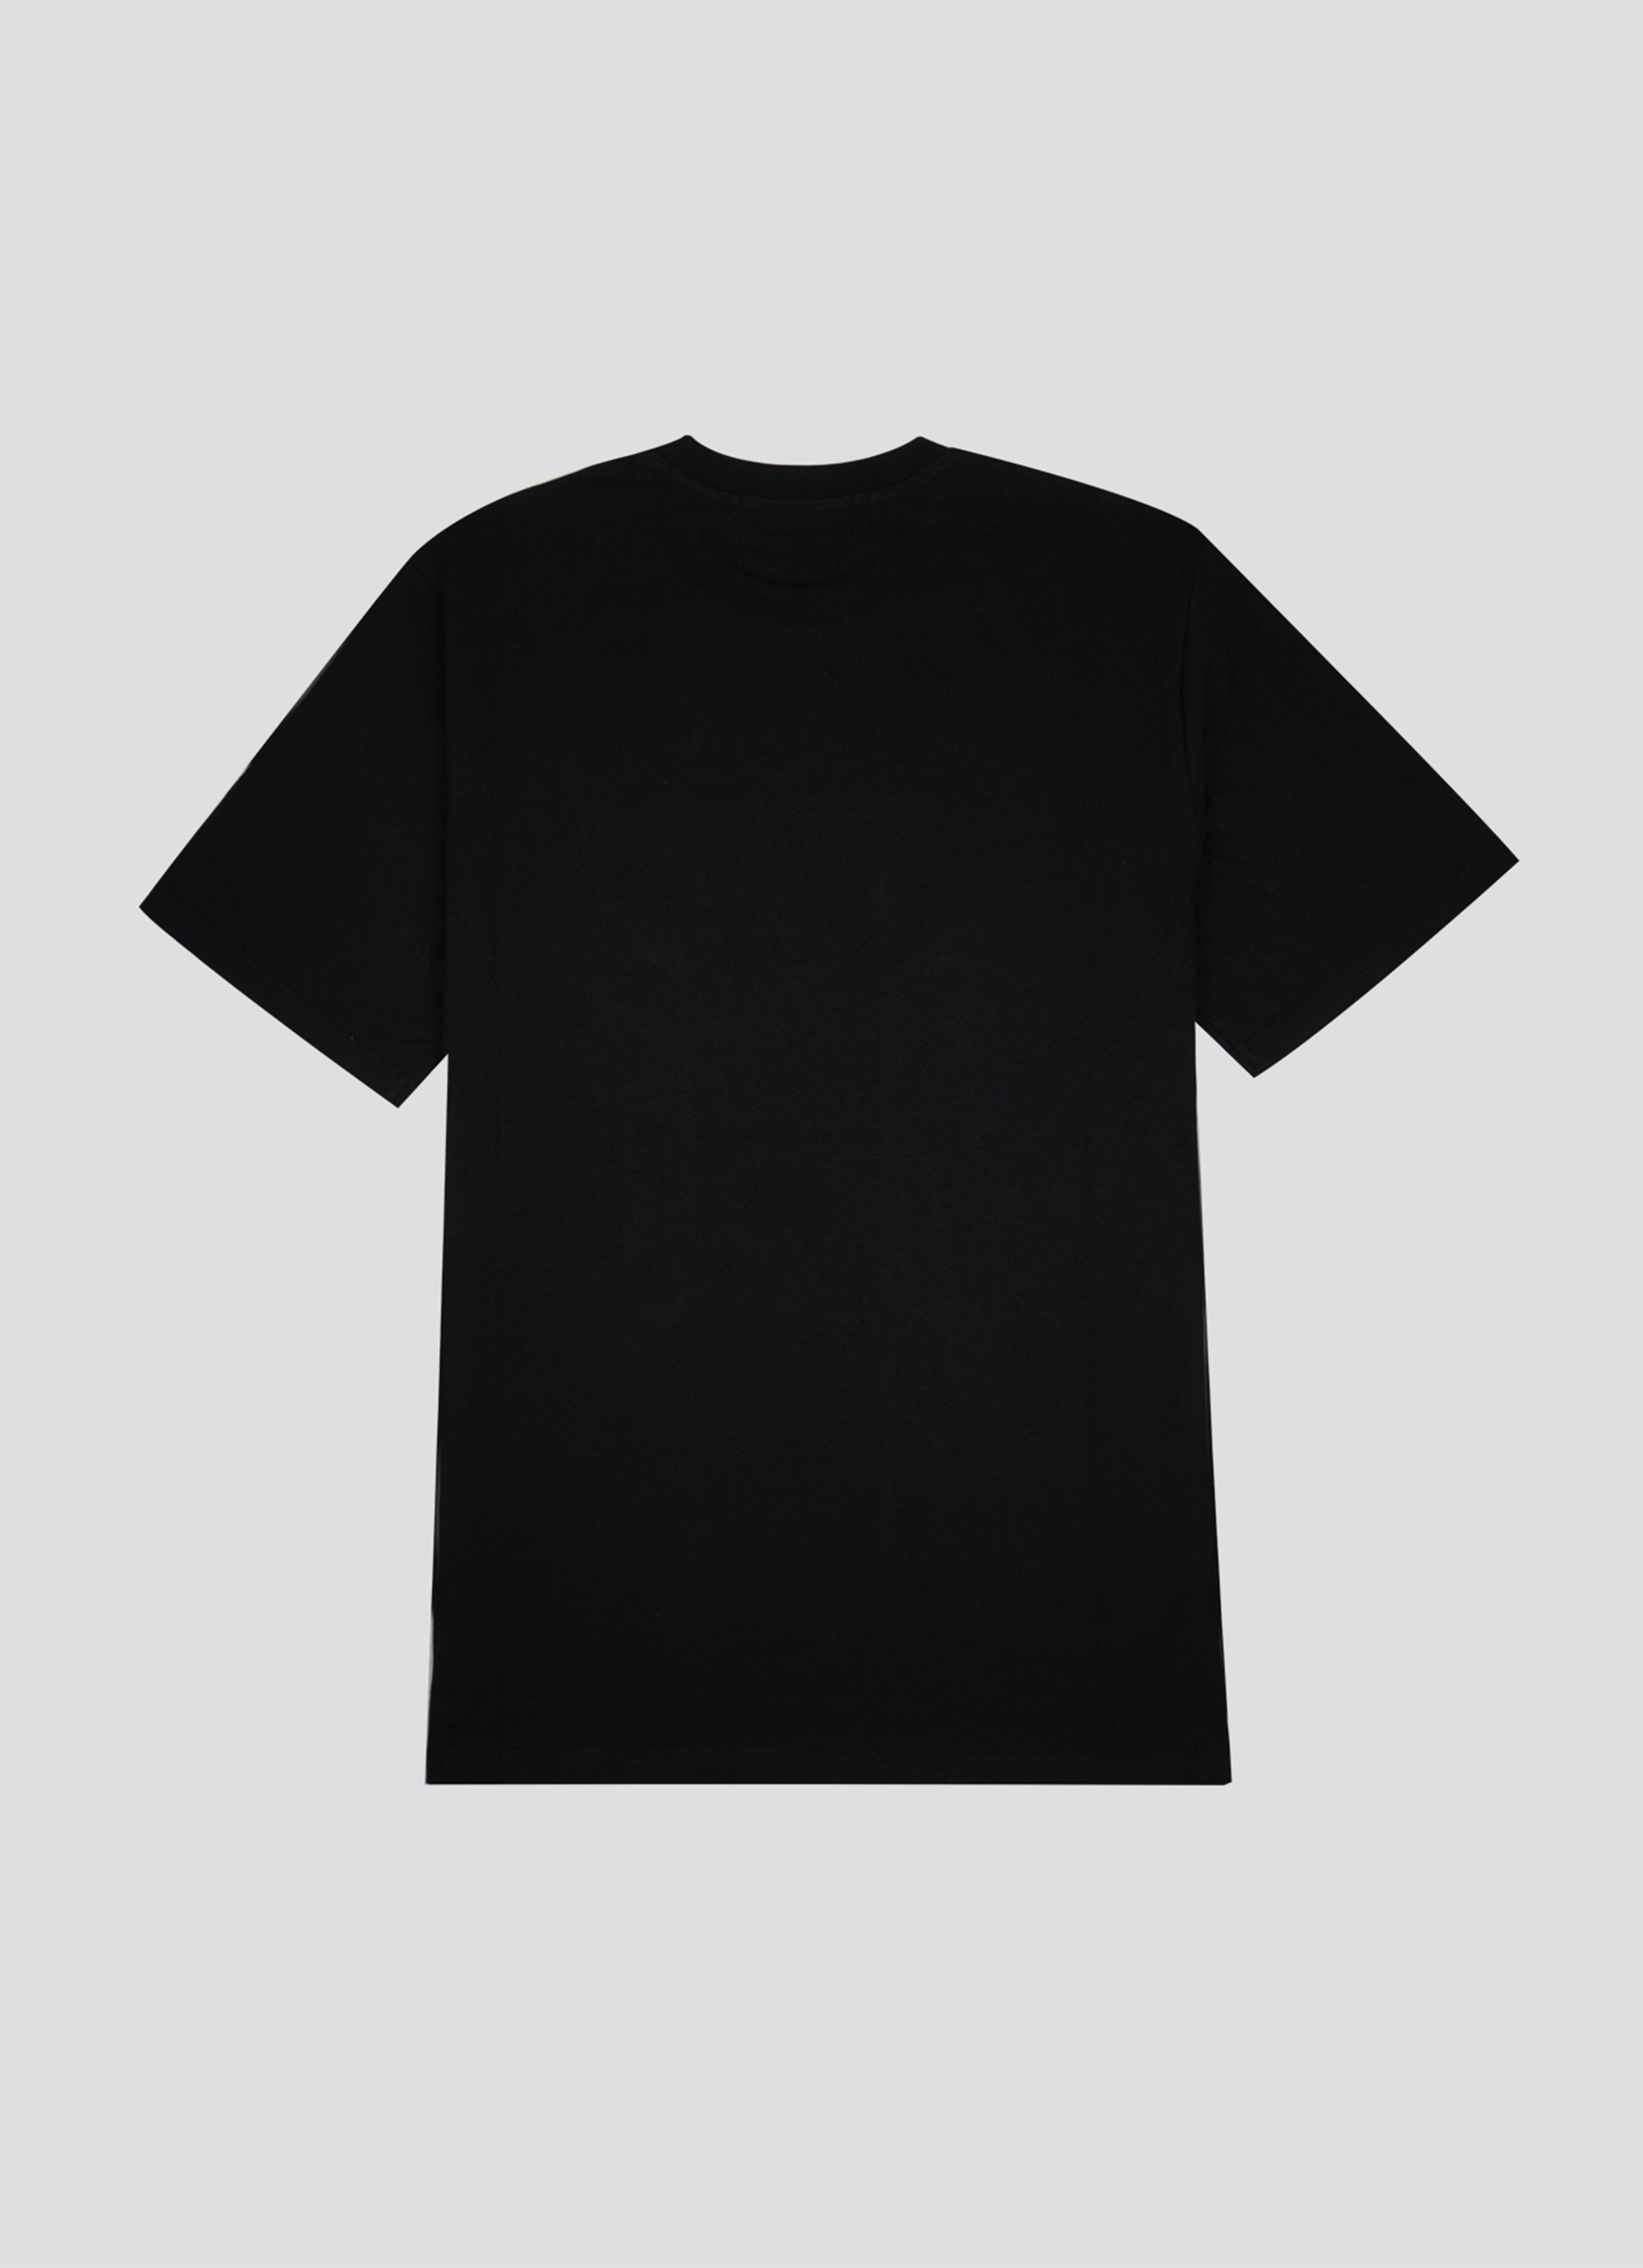 【NEW】BOXロゴTシャツ 詳細画像 ブラック×イエロー 2